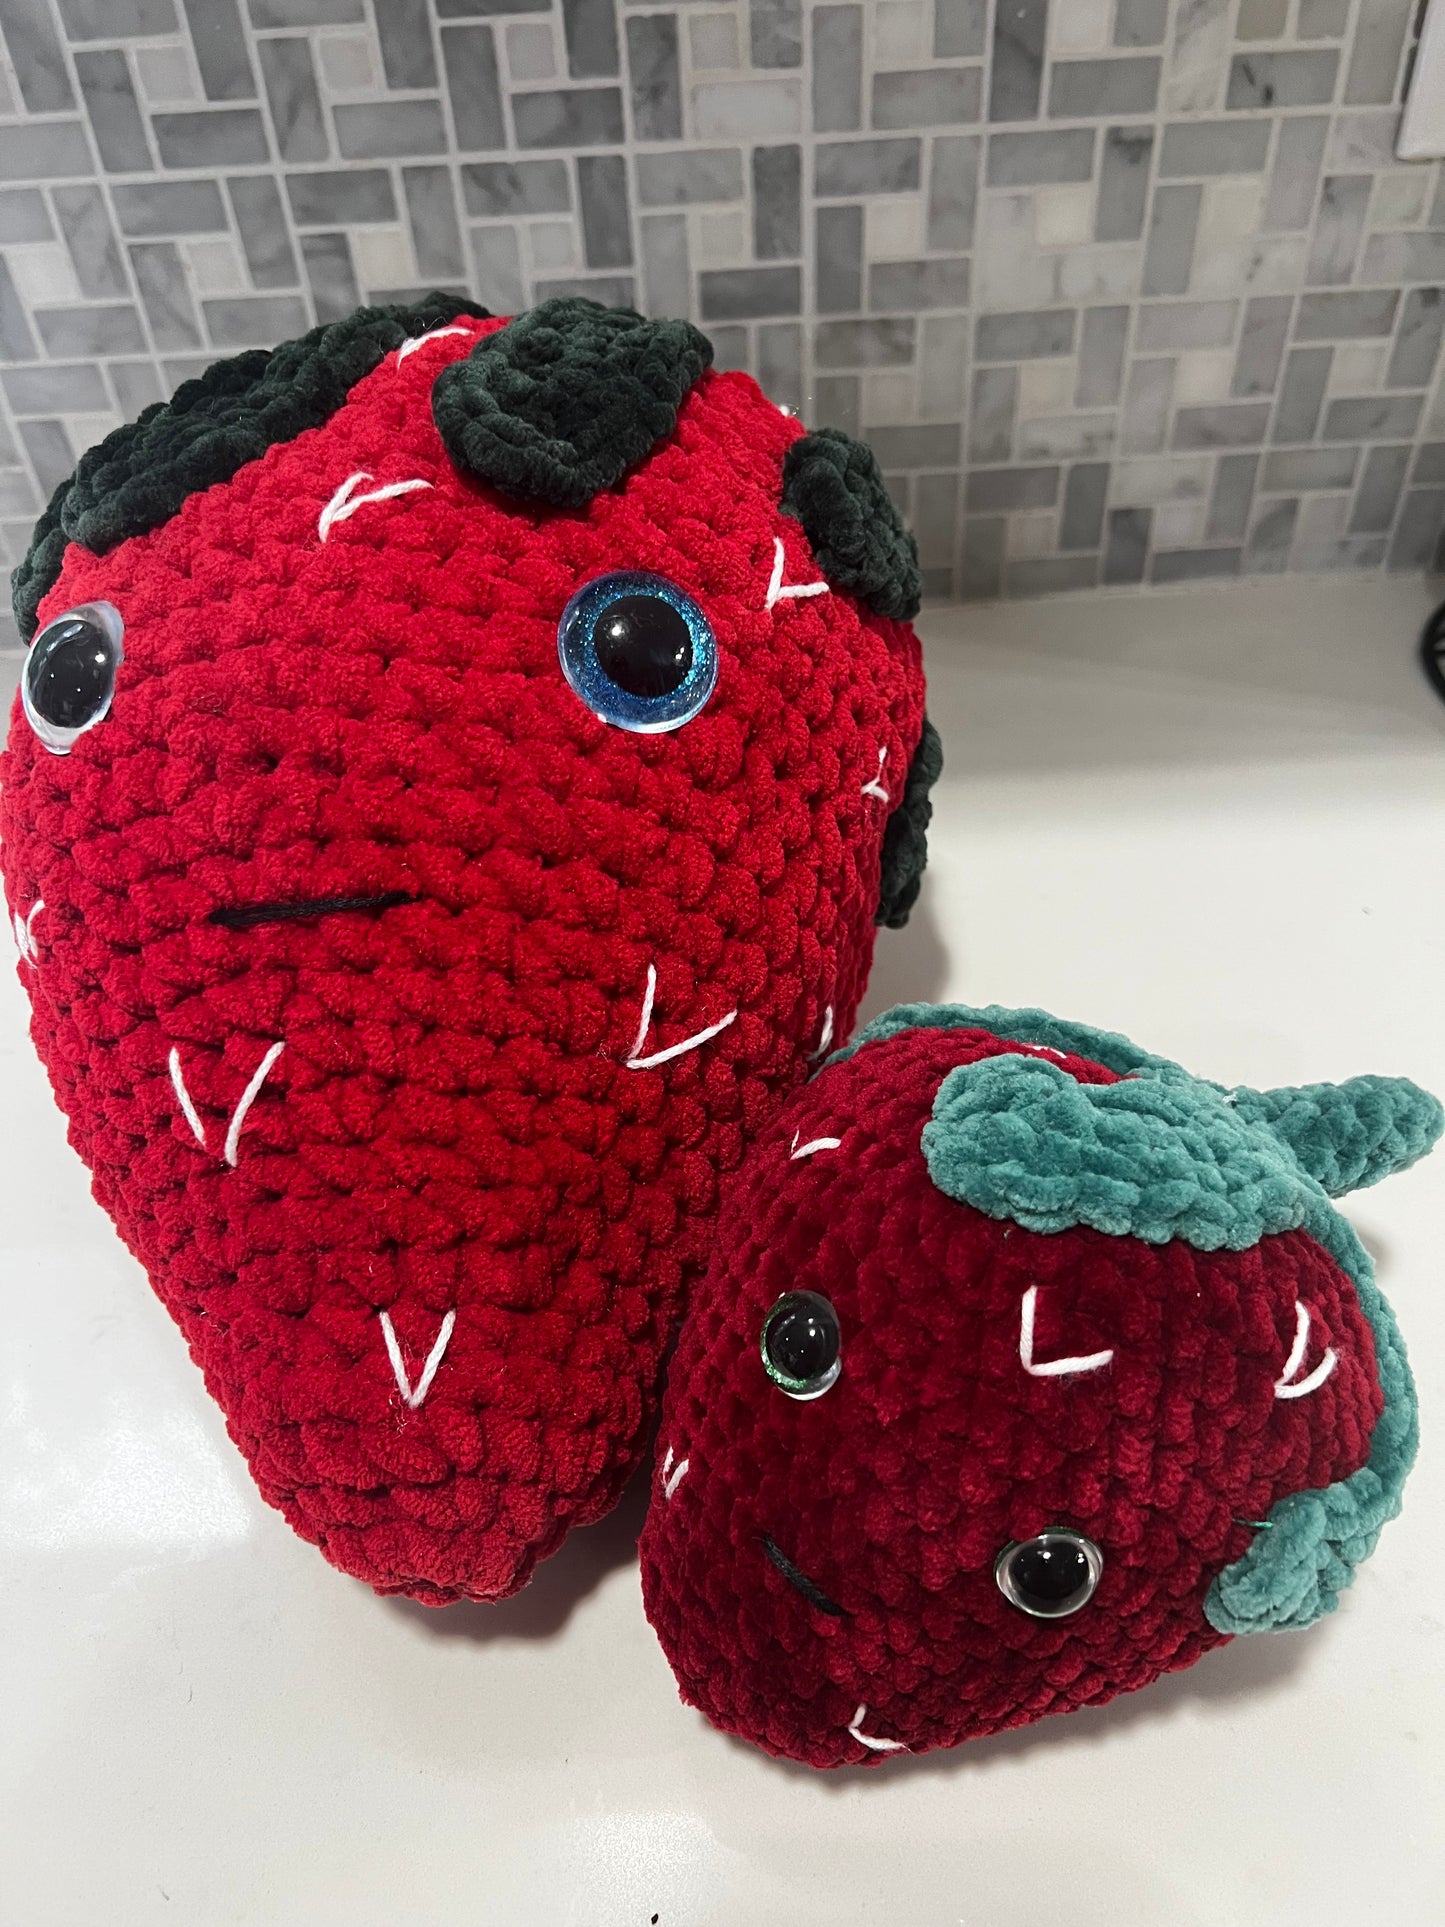 Stuffed Jumbo Strawberry 🍓 - Crochet Knitted Amigurumi Toy